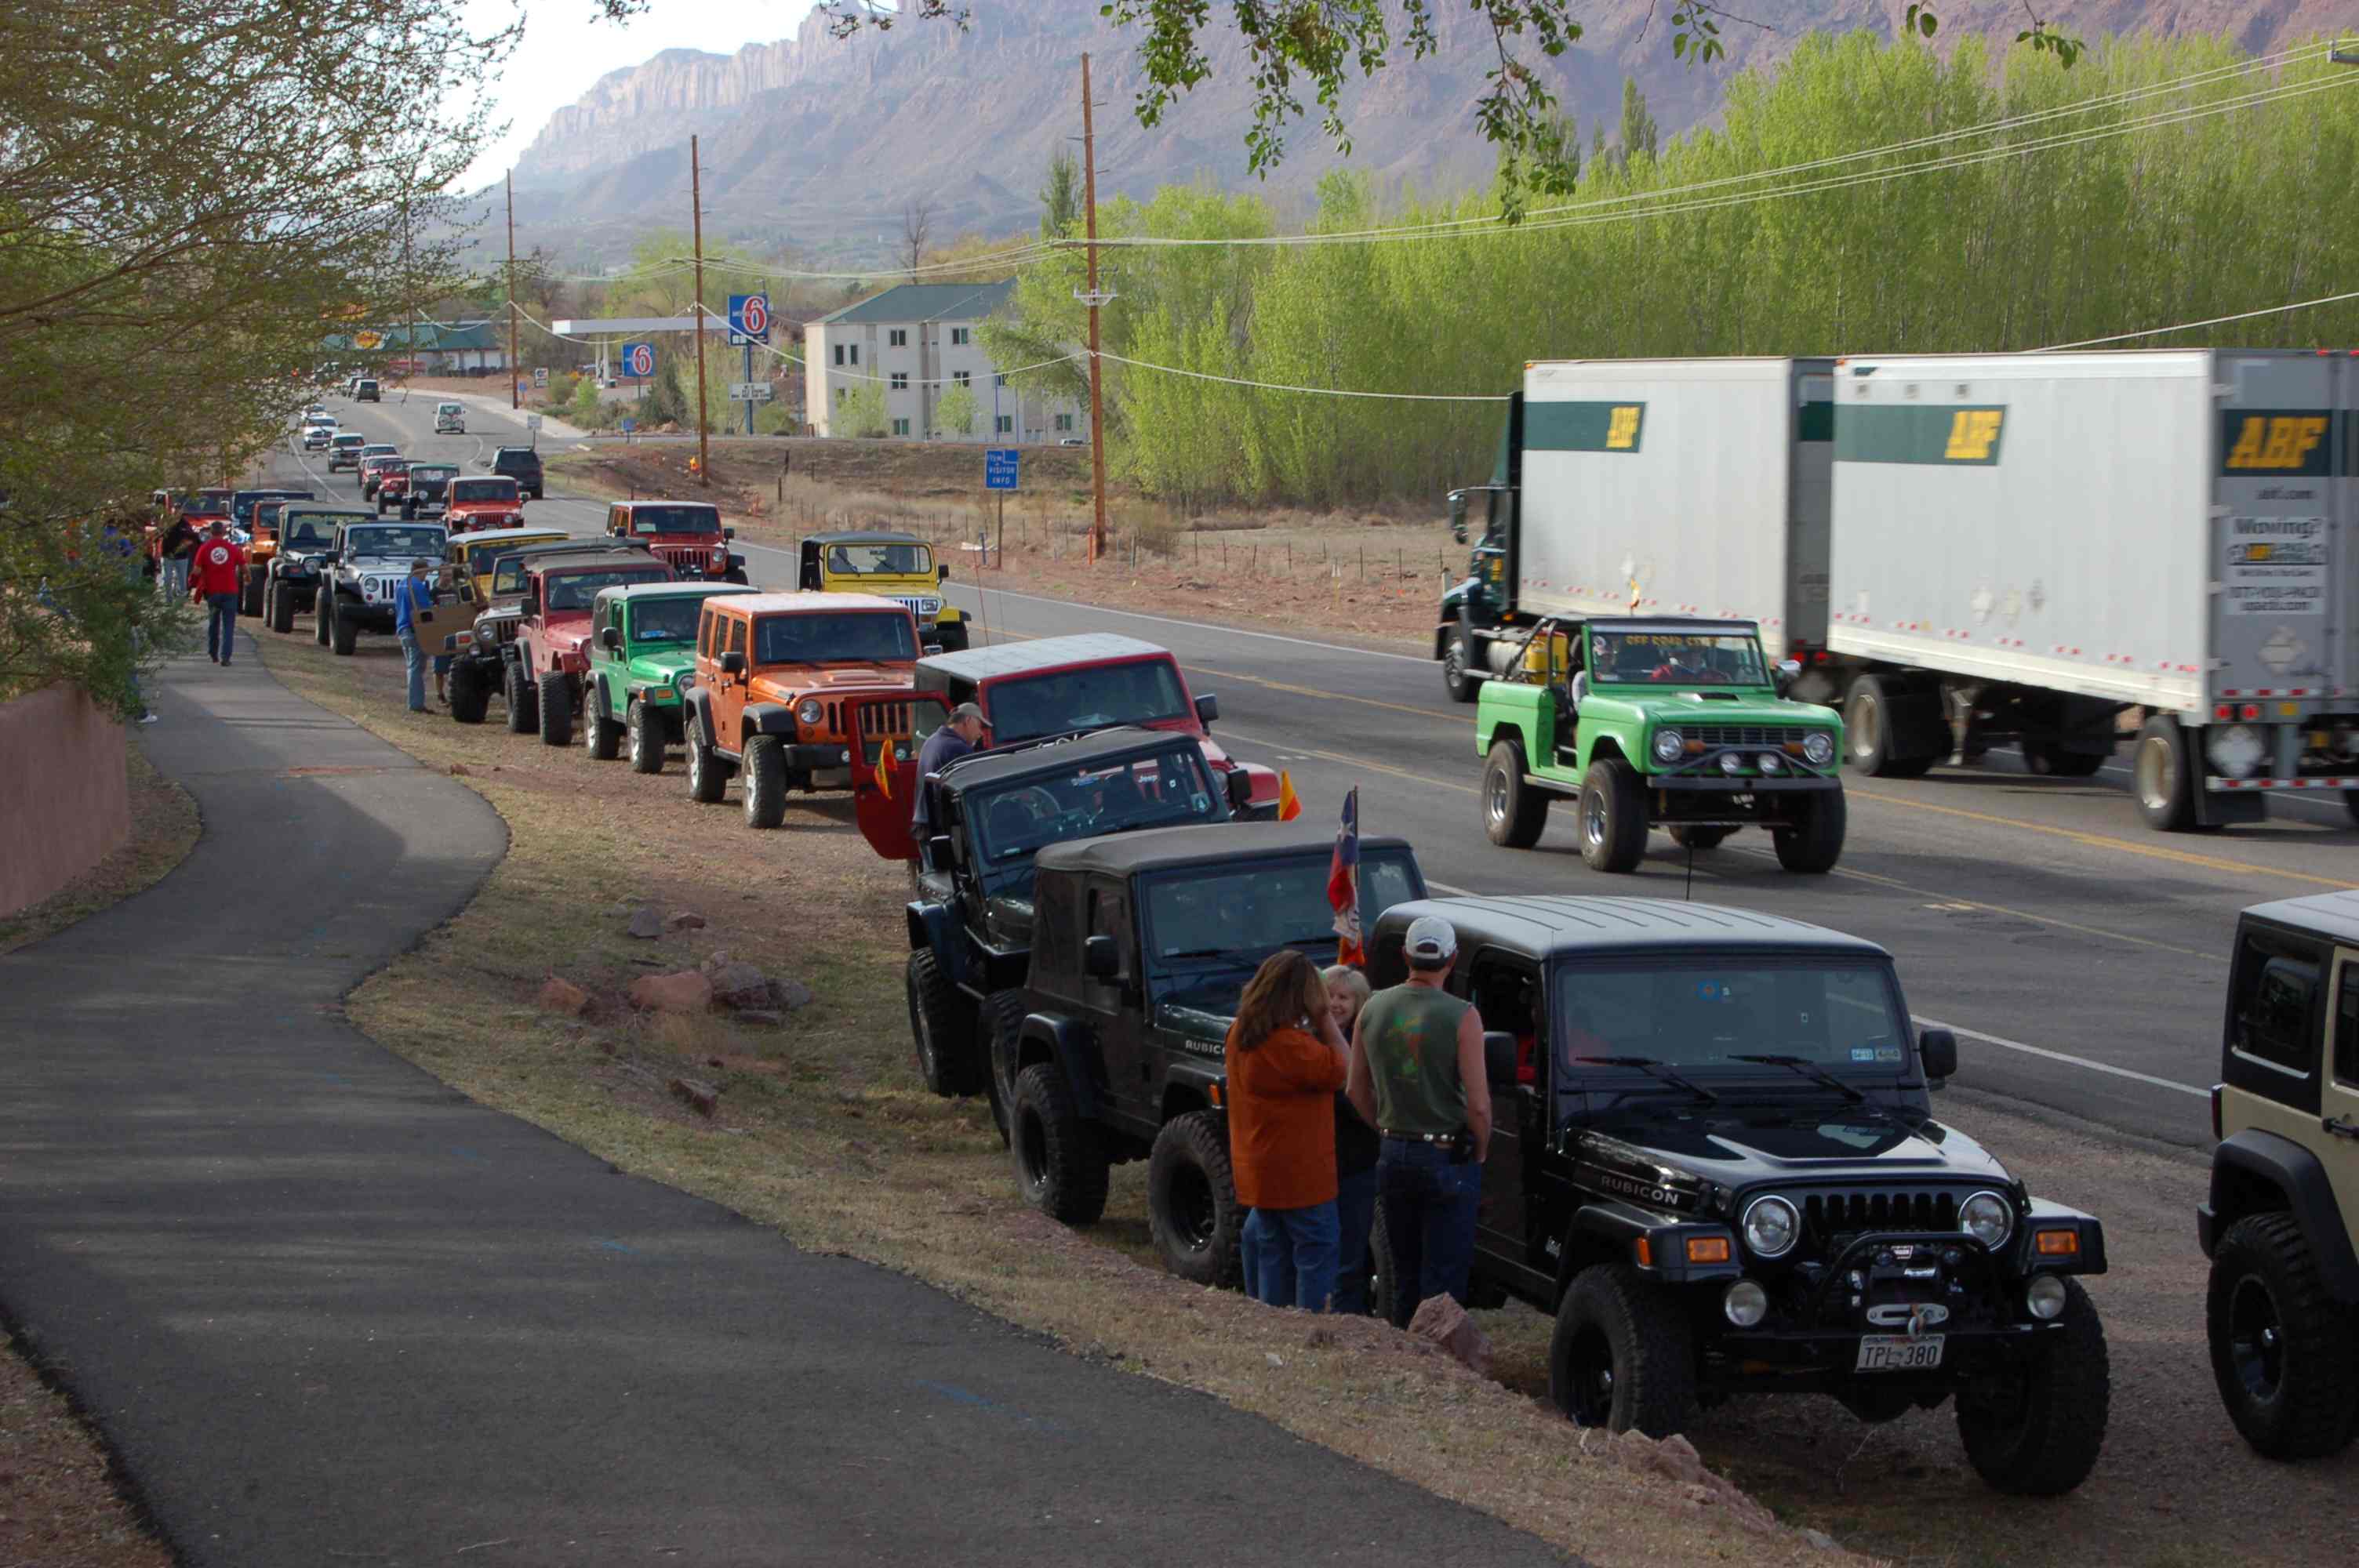 Moab jeep week